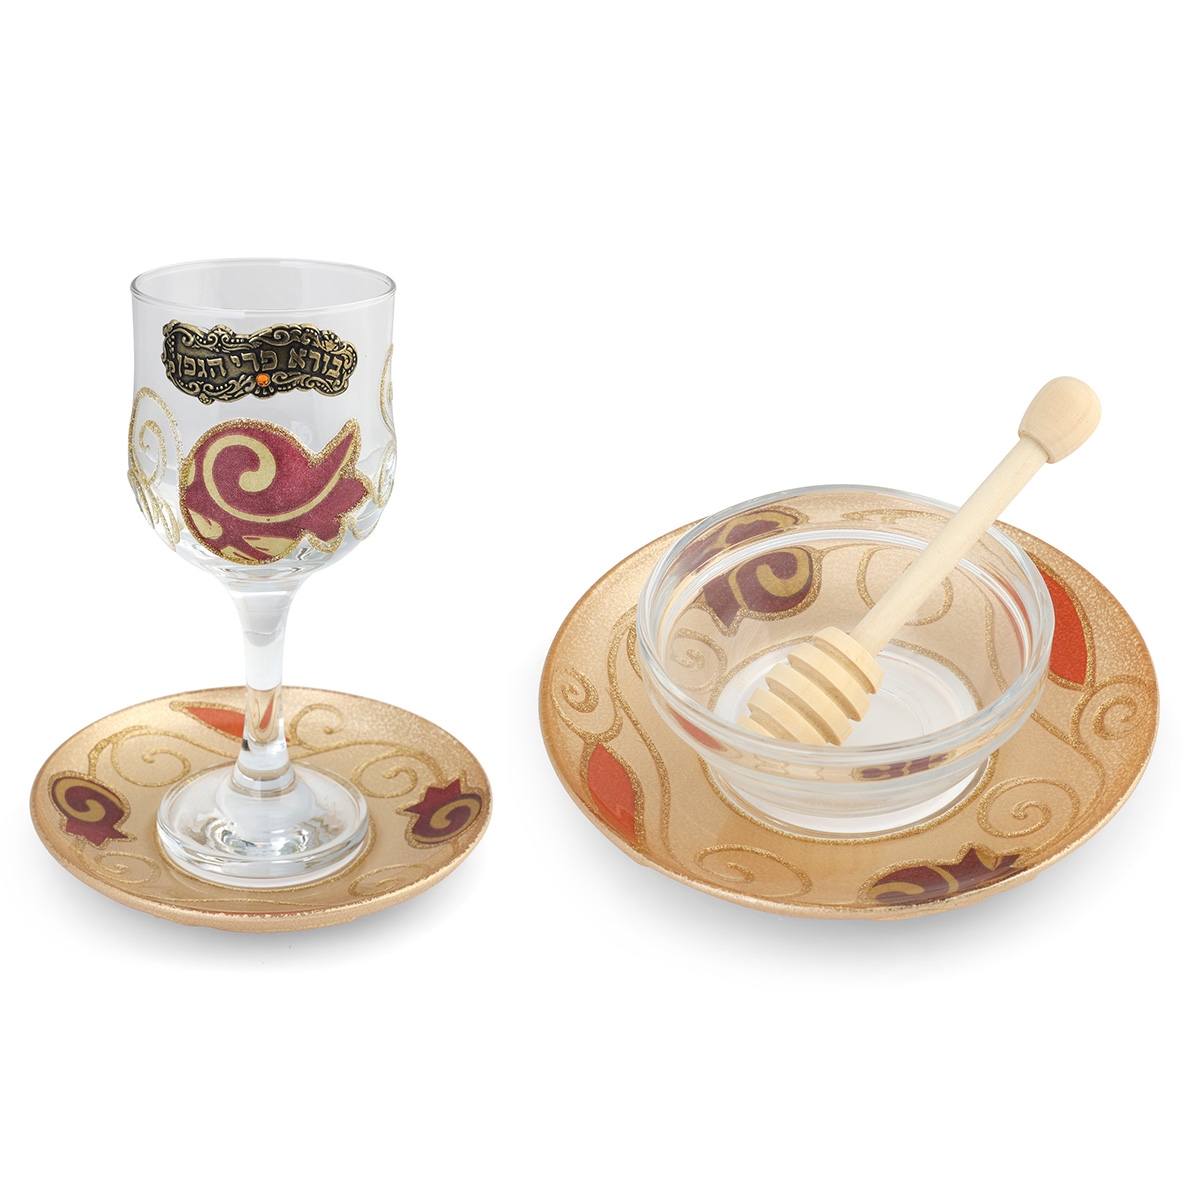 Lily Art Glass Rosh Hashanah Set - Gold Swirl Pomegranate Design - 1